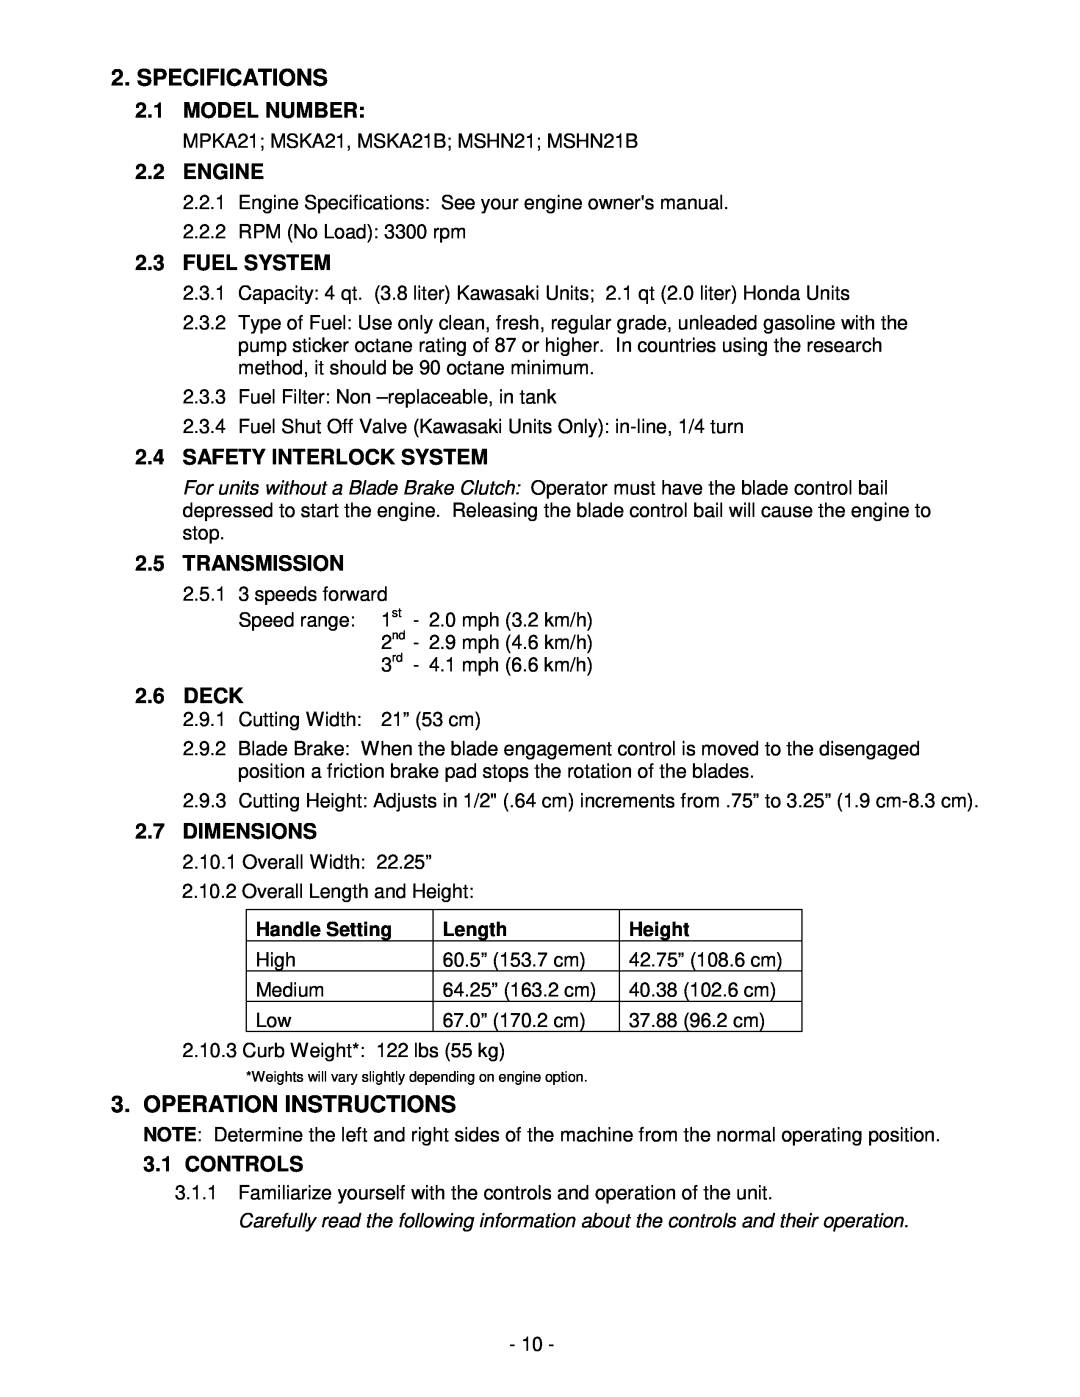 Honda Power Equipment metro 21 manual Specifications, Operation Instructions 